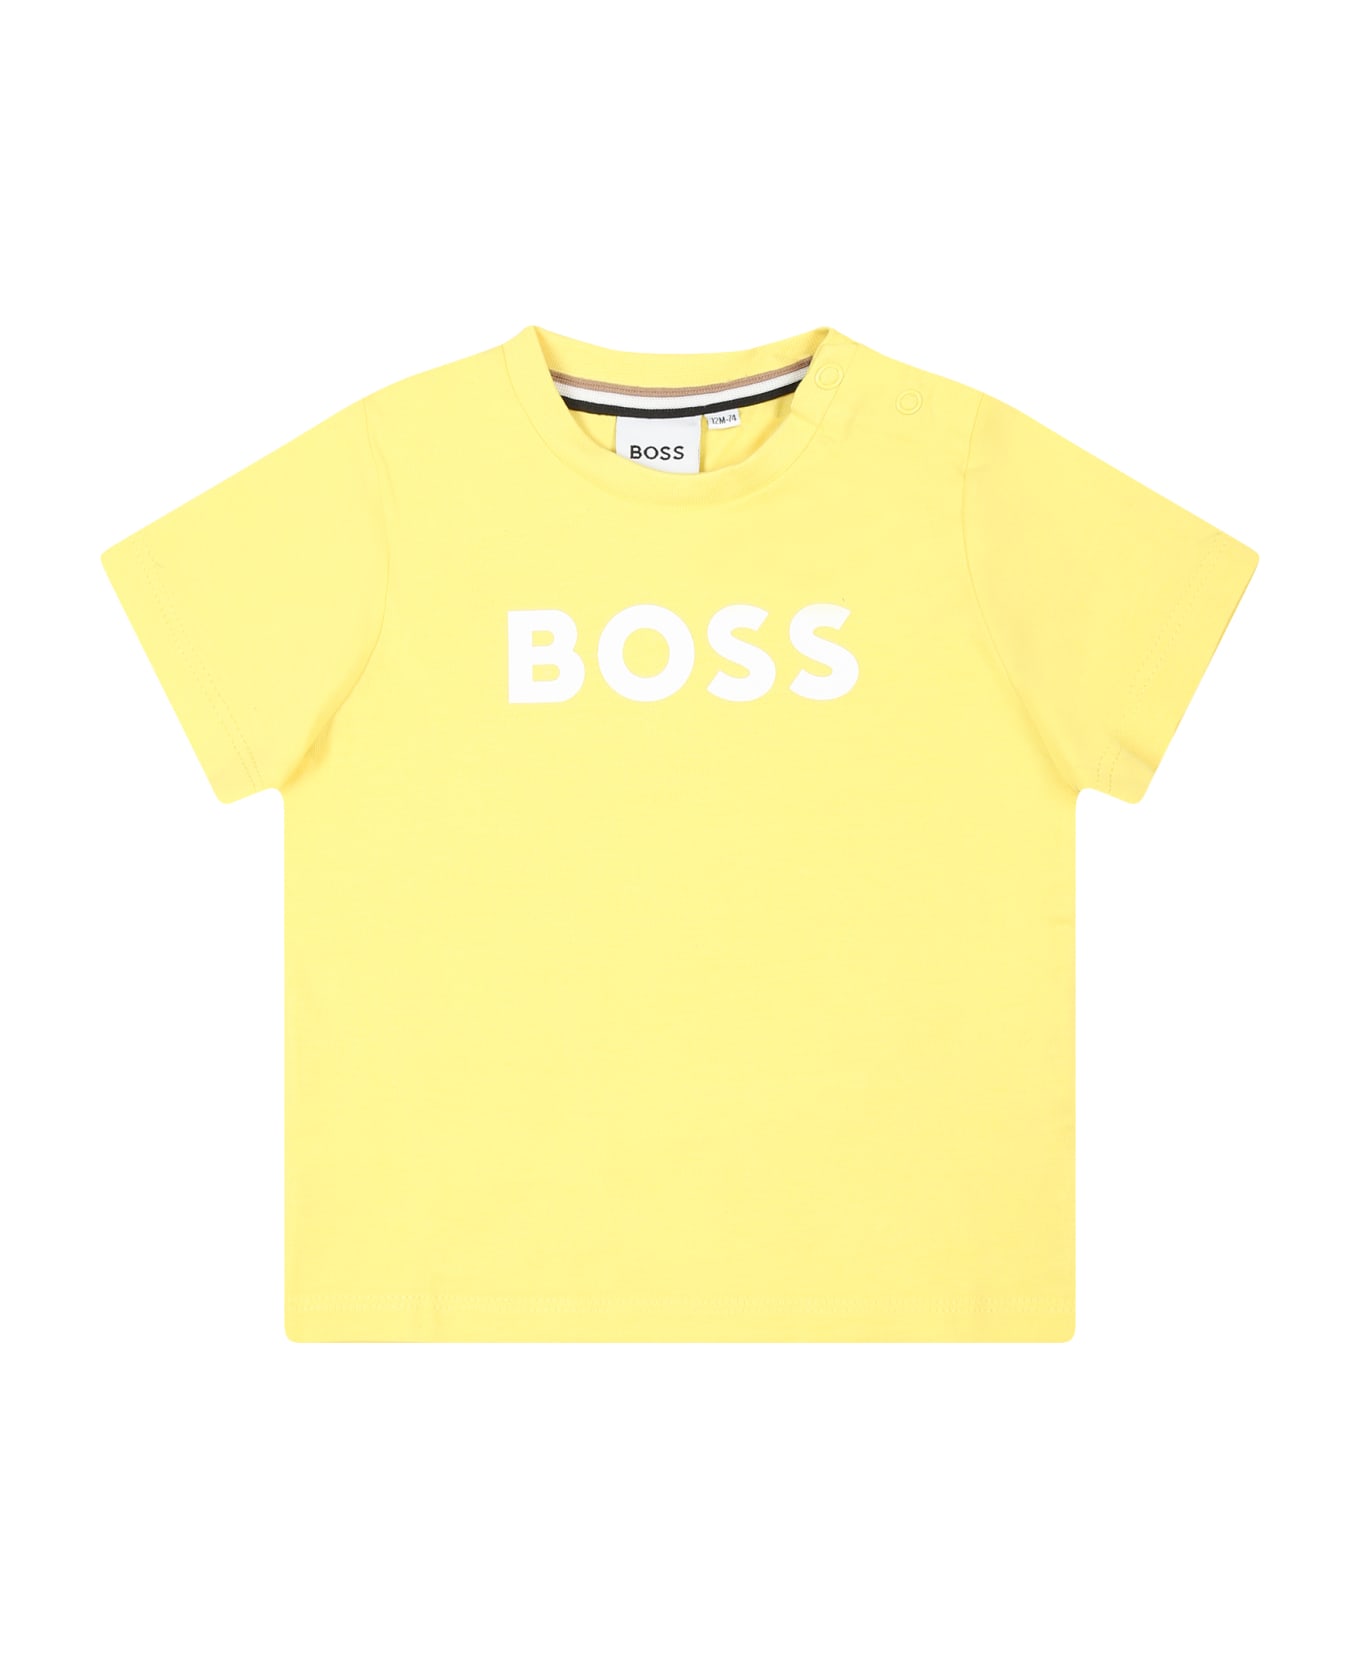 Hugo Boss Yellow T-hirt For Baby Boy With Logo - Yellow